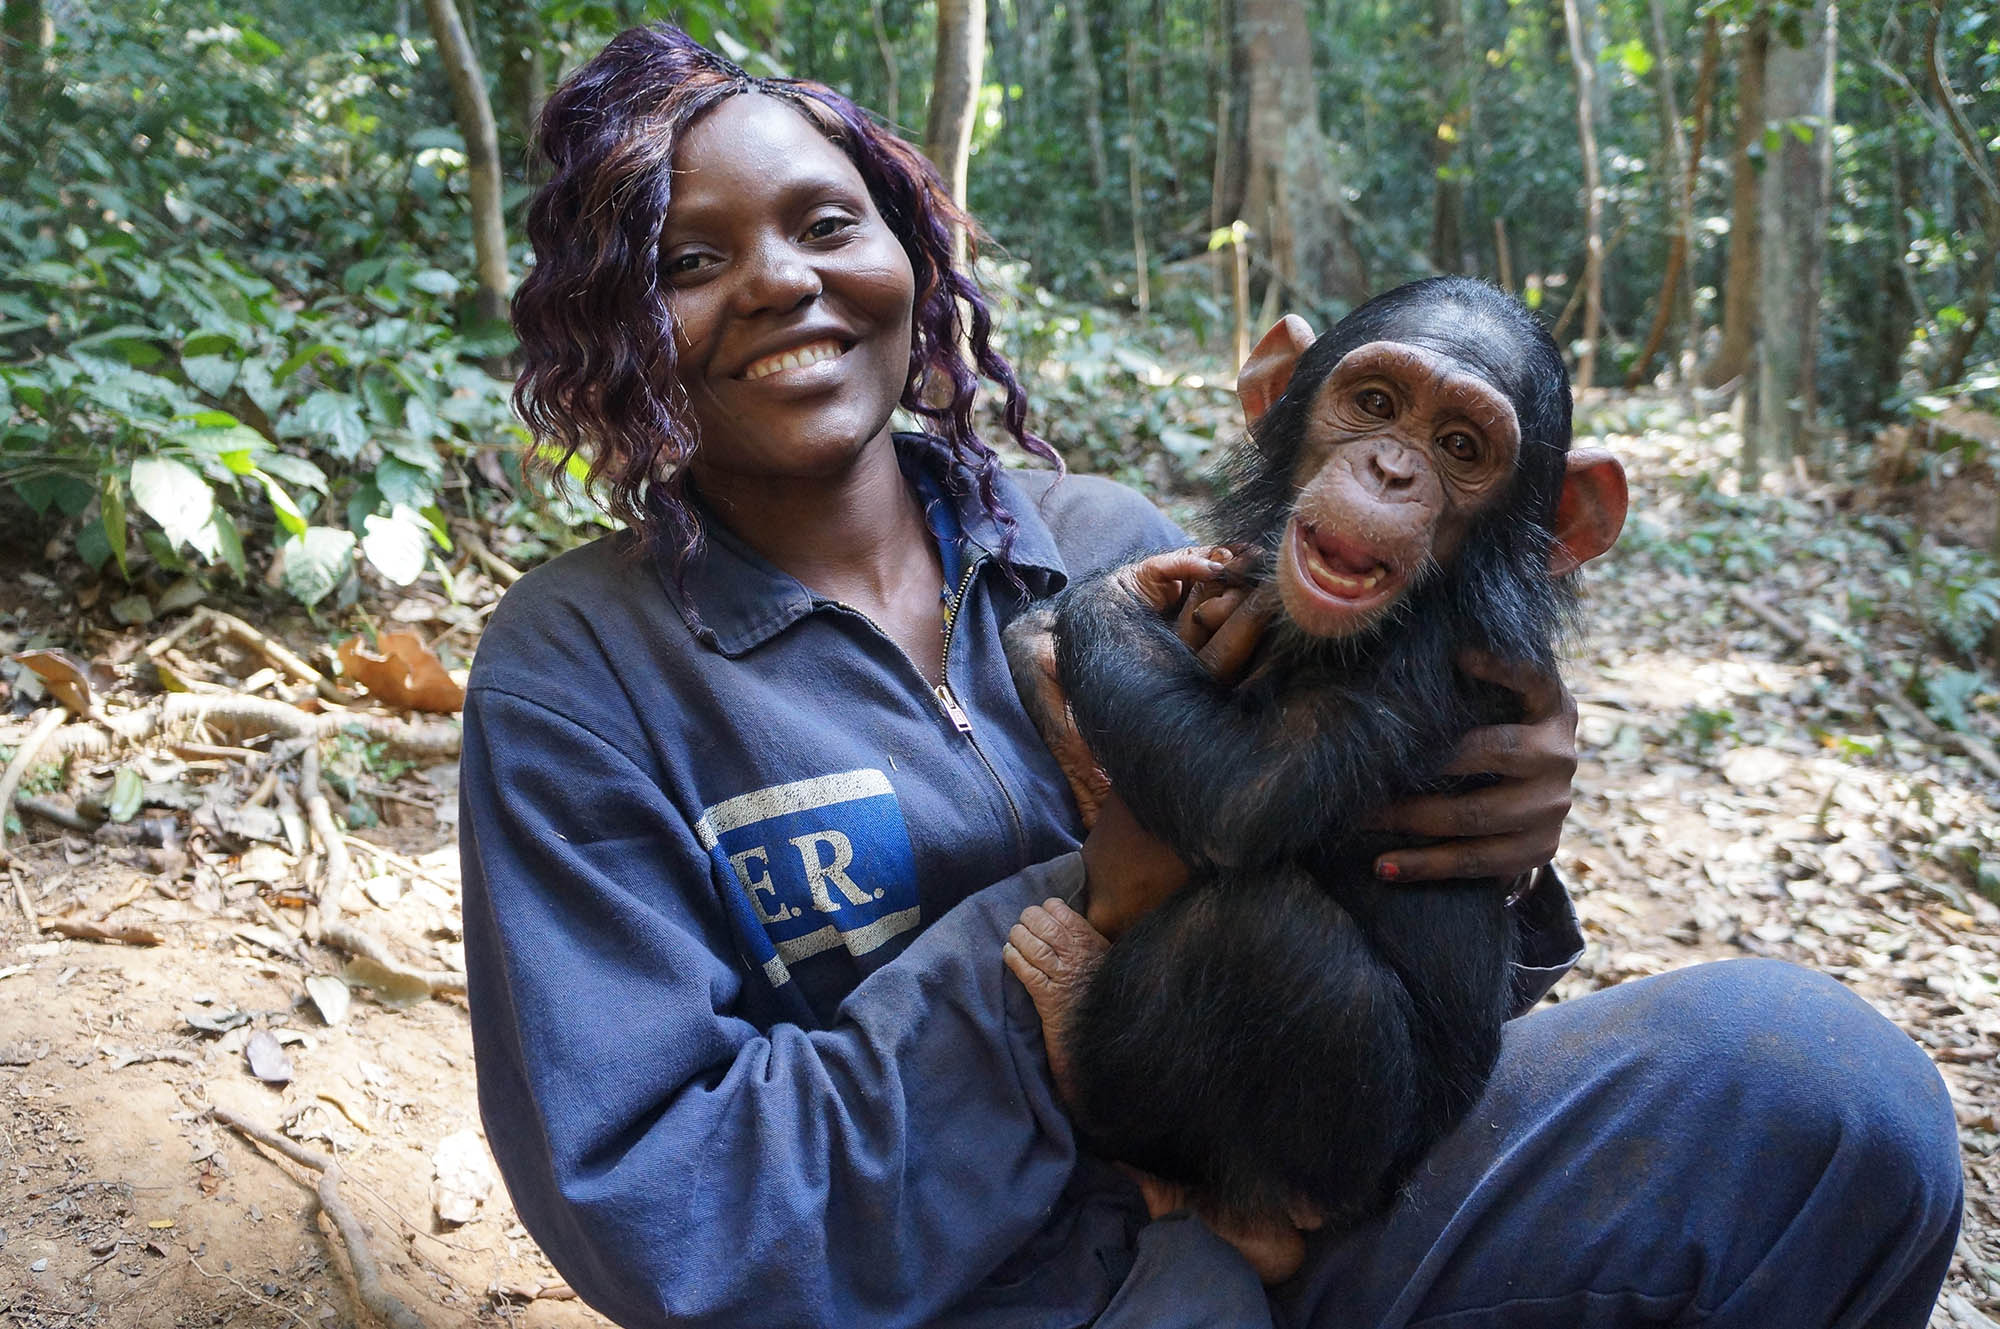 For Chimpanzees, Human Touch Can Hurt – SAPIENS